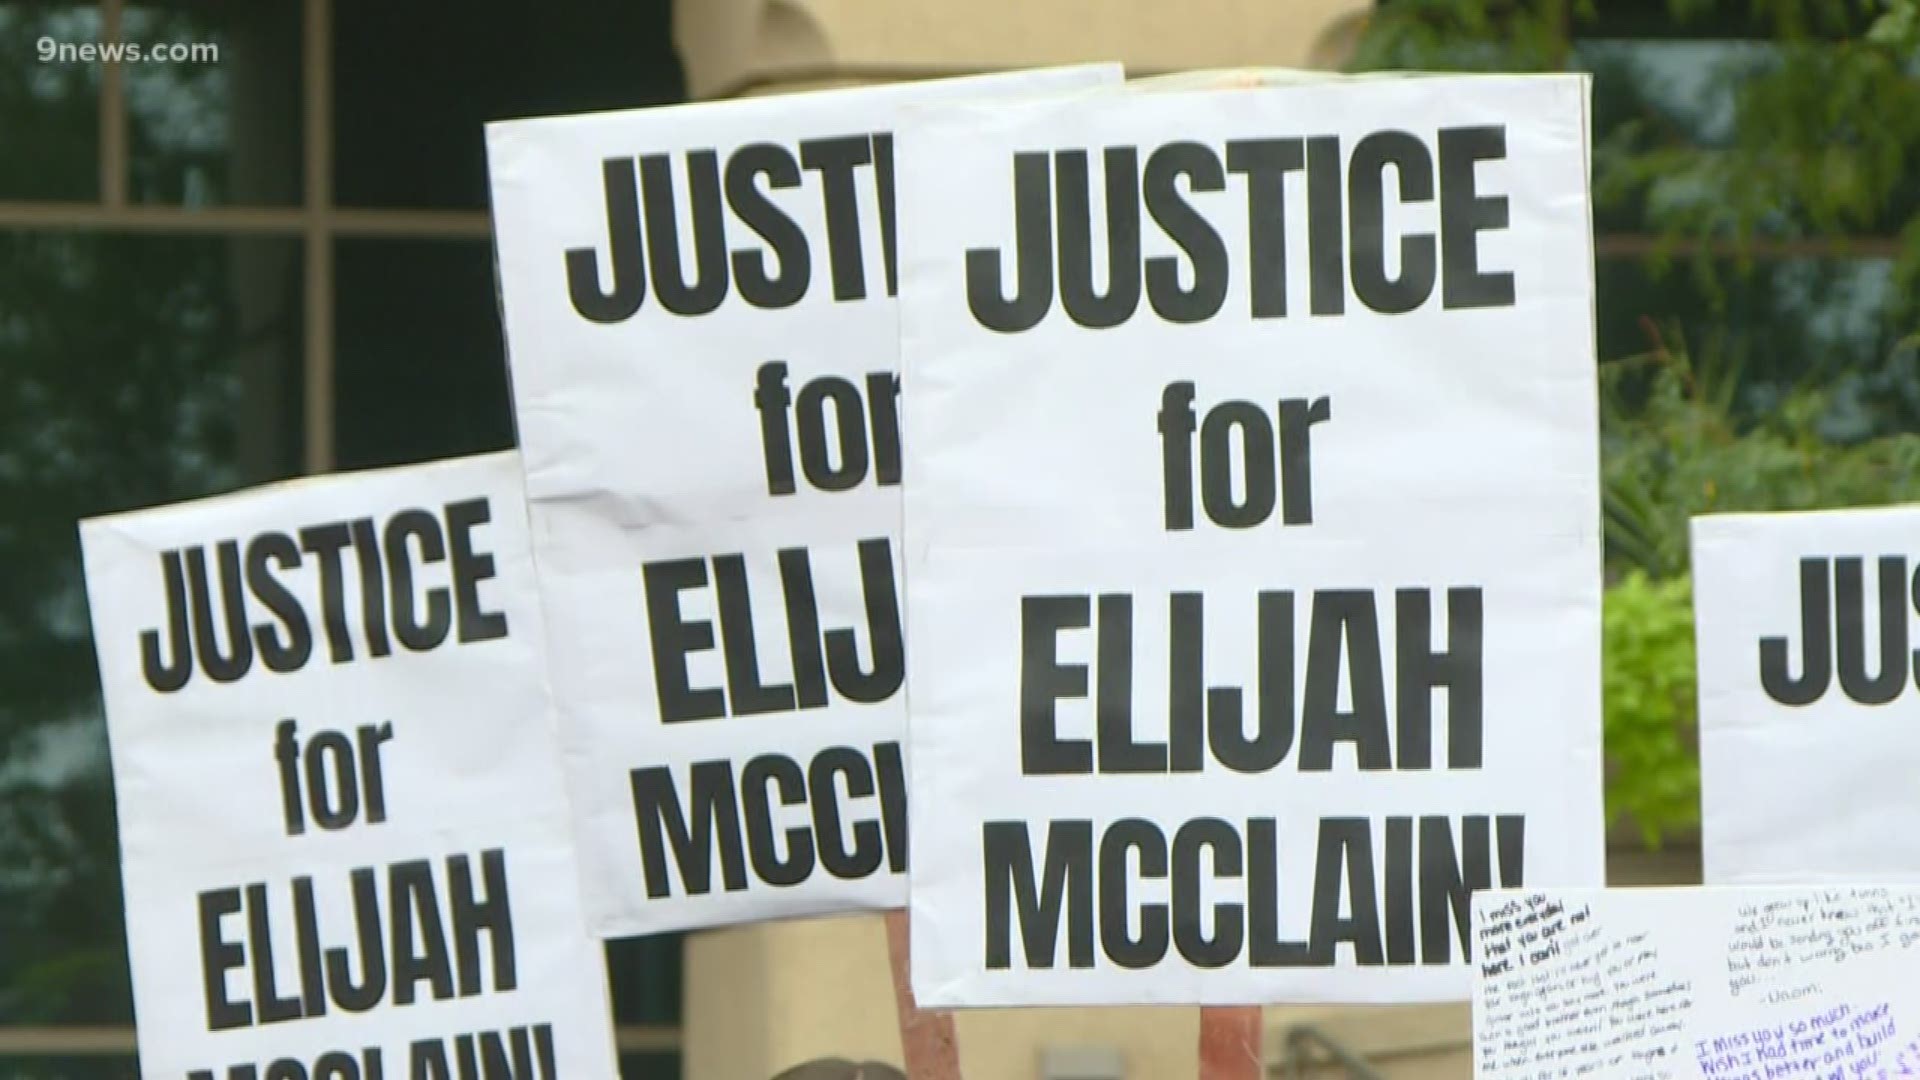 On Aug. 24, Aurora Police said they asked paramedics to give Elijah McClain standard medication to "reduce agitation."